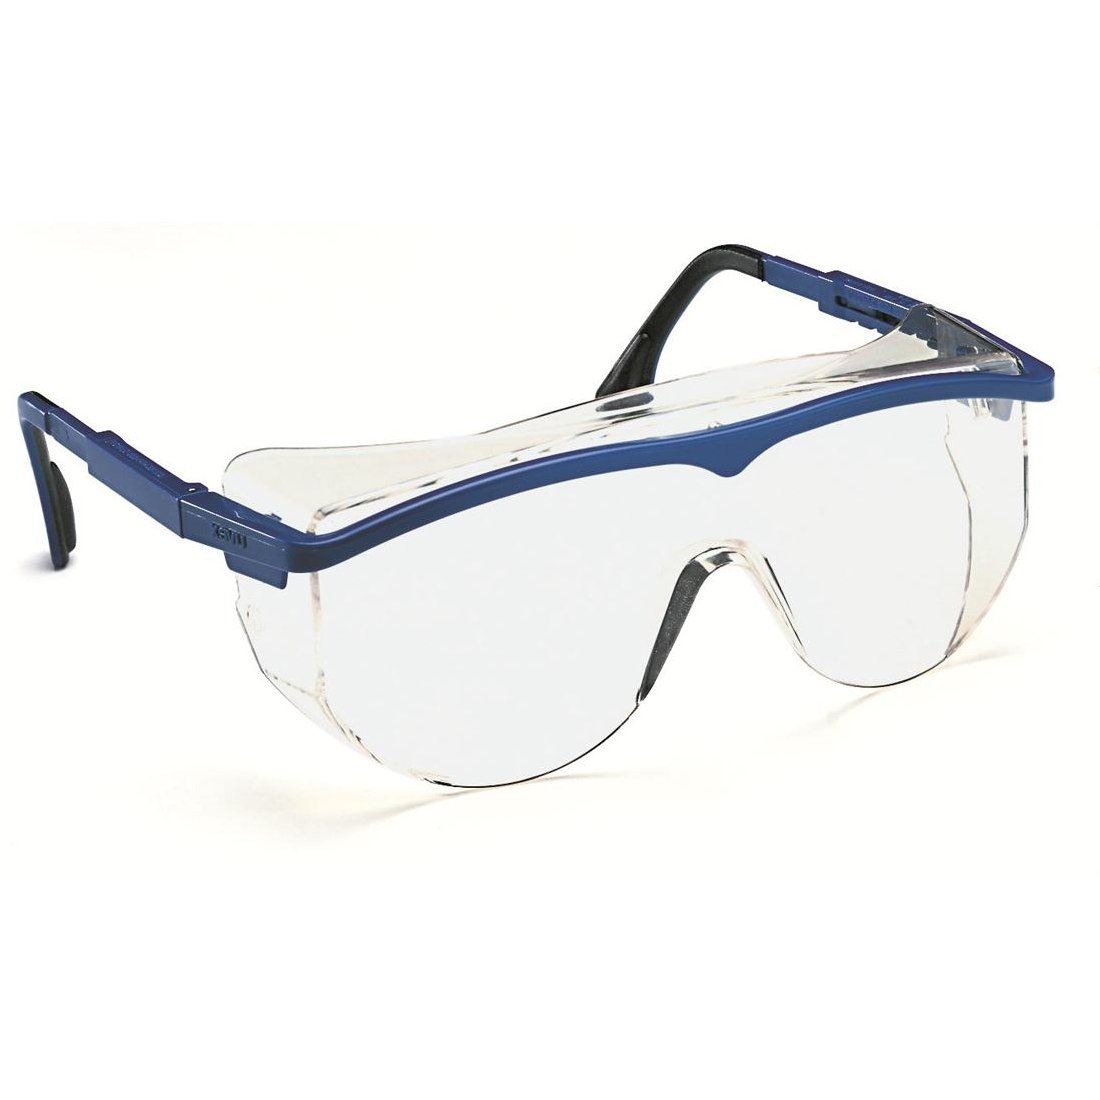 Uvex 9167-566 Astromax Safety Glasses Glasses Polycarbonate Clear Lens En166